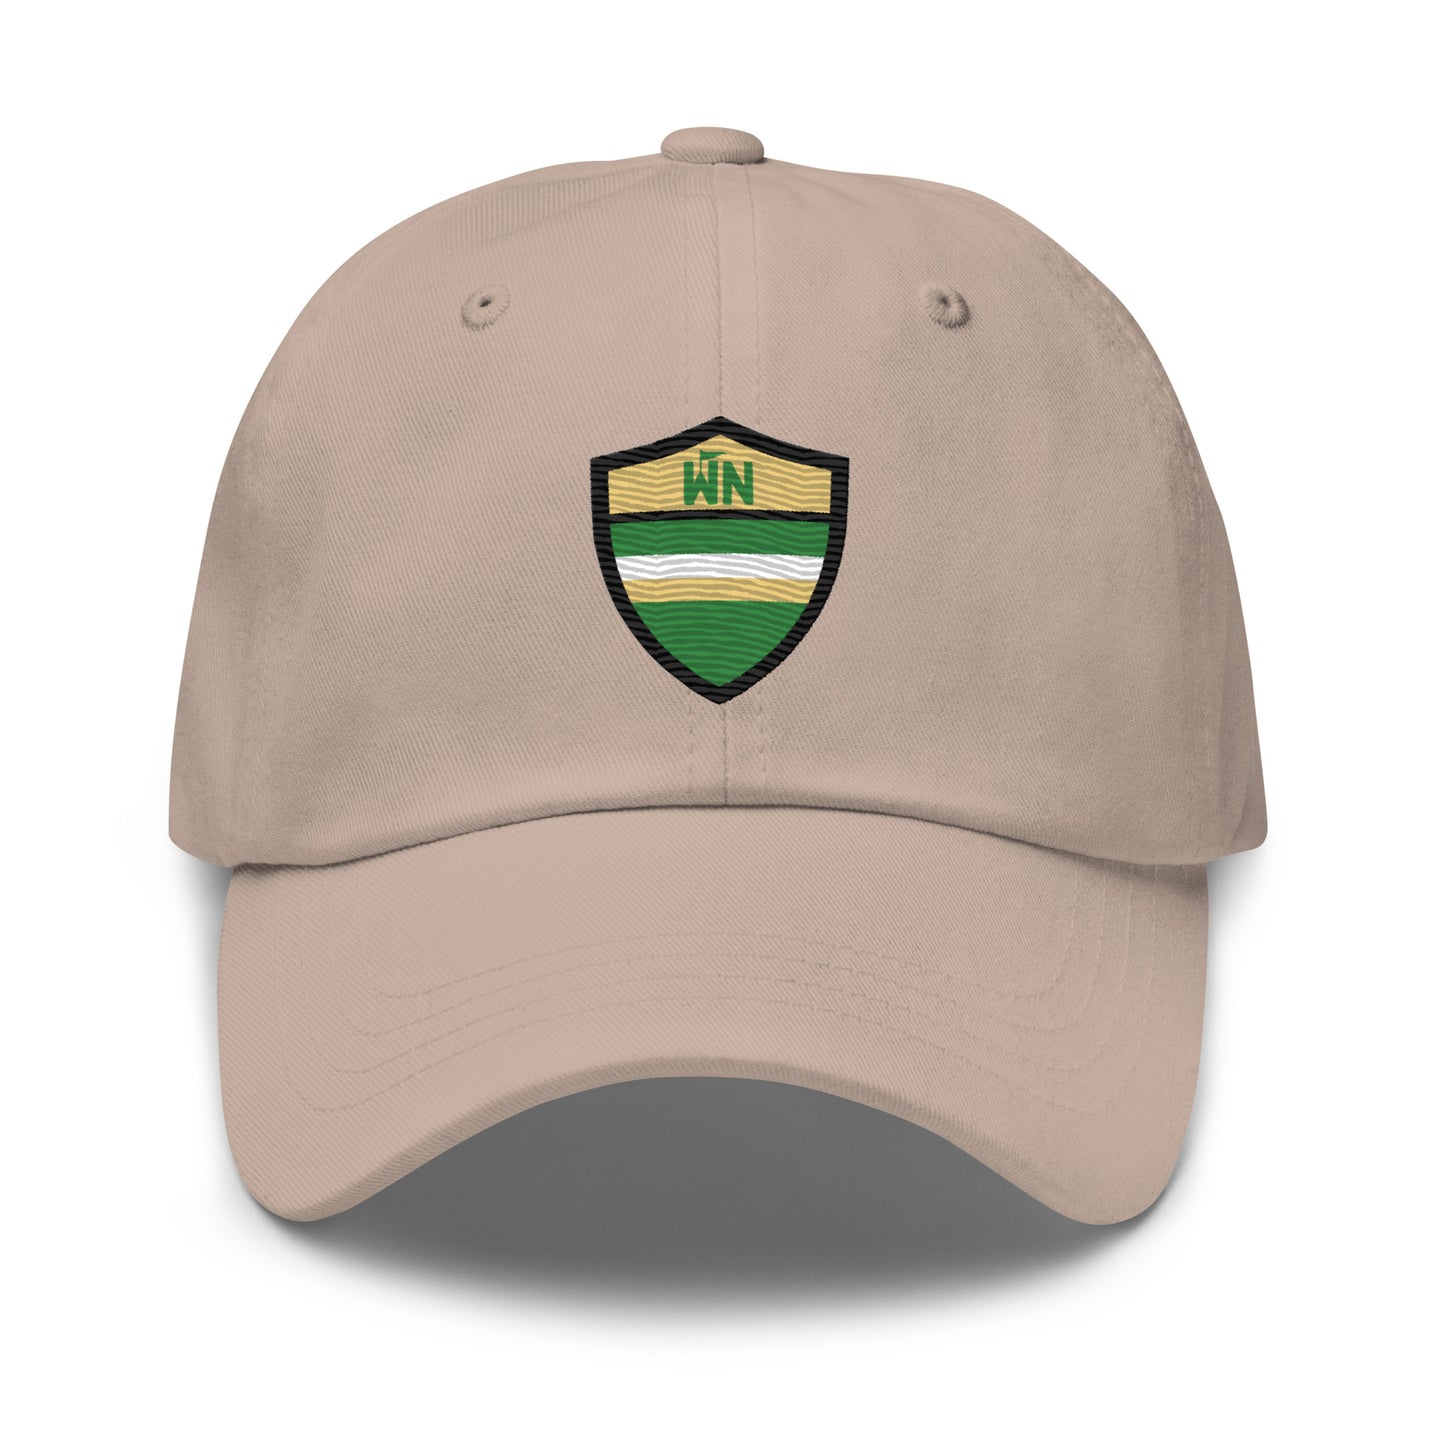 South Bend Golf Hat